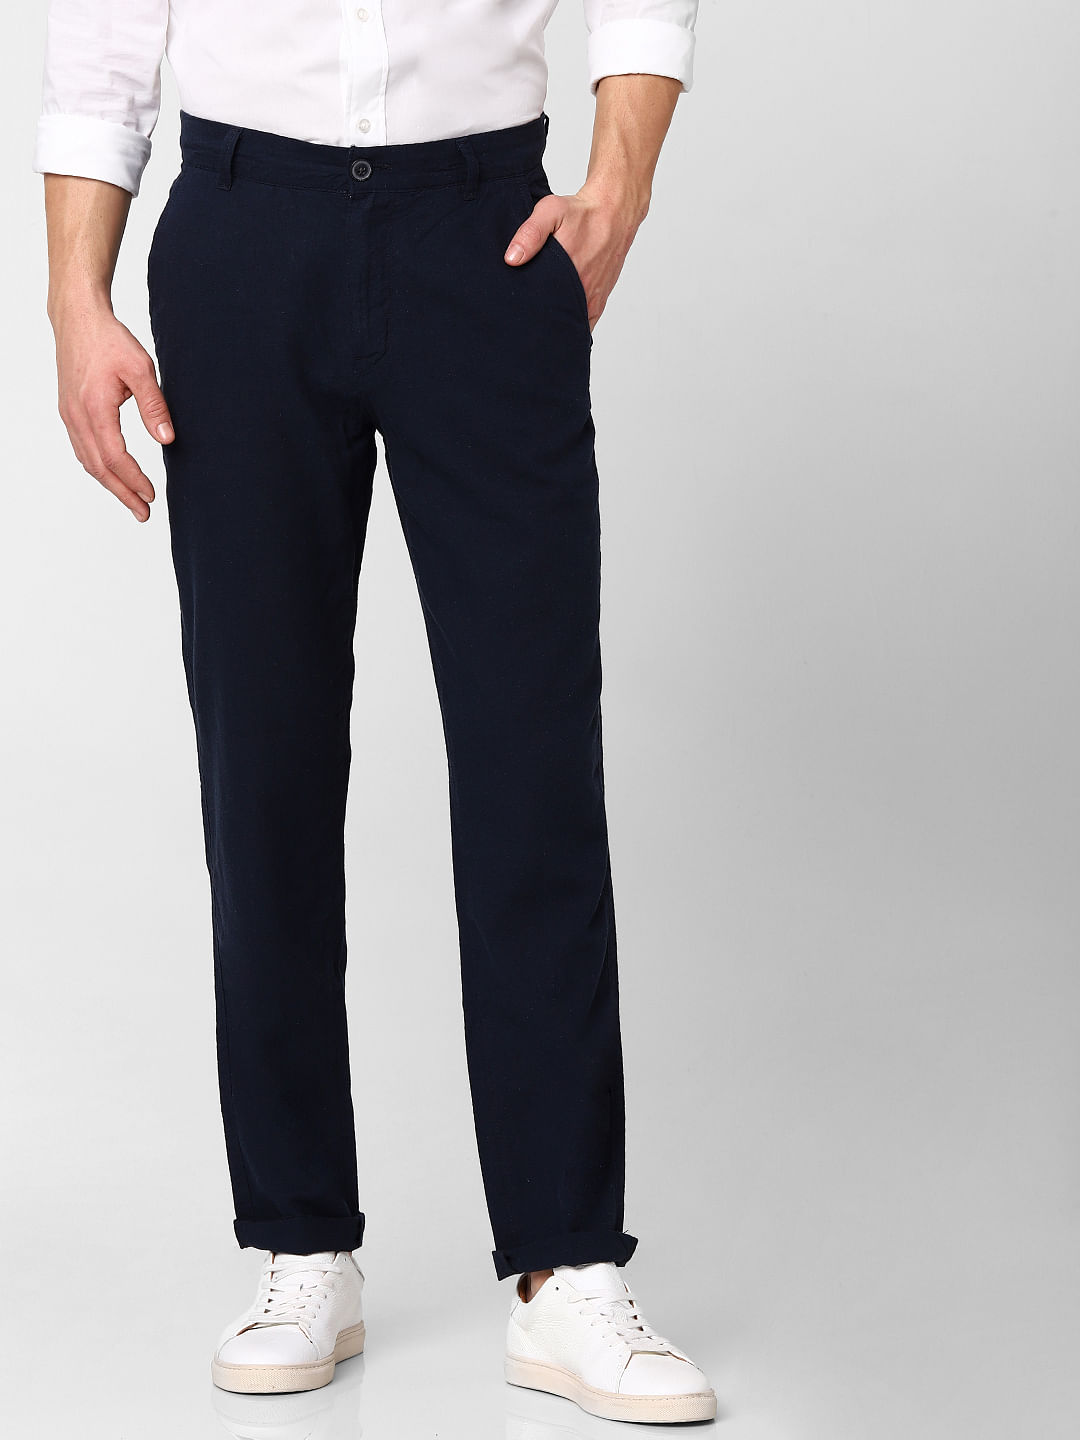 PARK AVENUE Regular Fit Men Blue Trousers  Buy PARK AVENUE Regular Fit Men  Blue Trousers Online at Best Prices in India  Flipkartcom